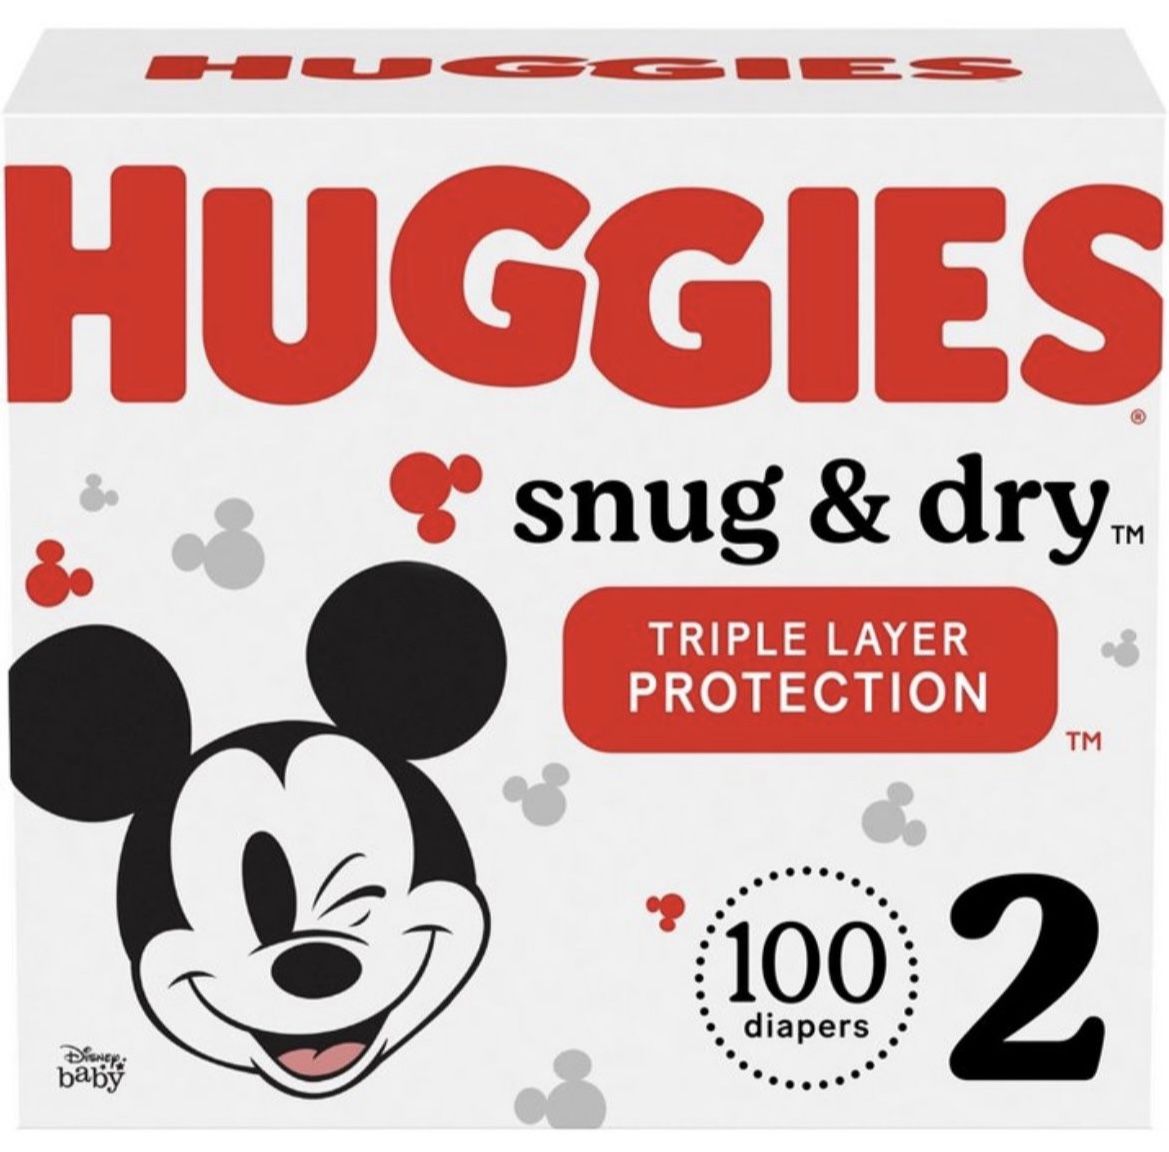 Huggies Snug & Dry Size 2